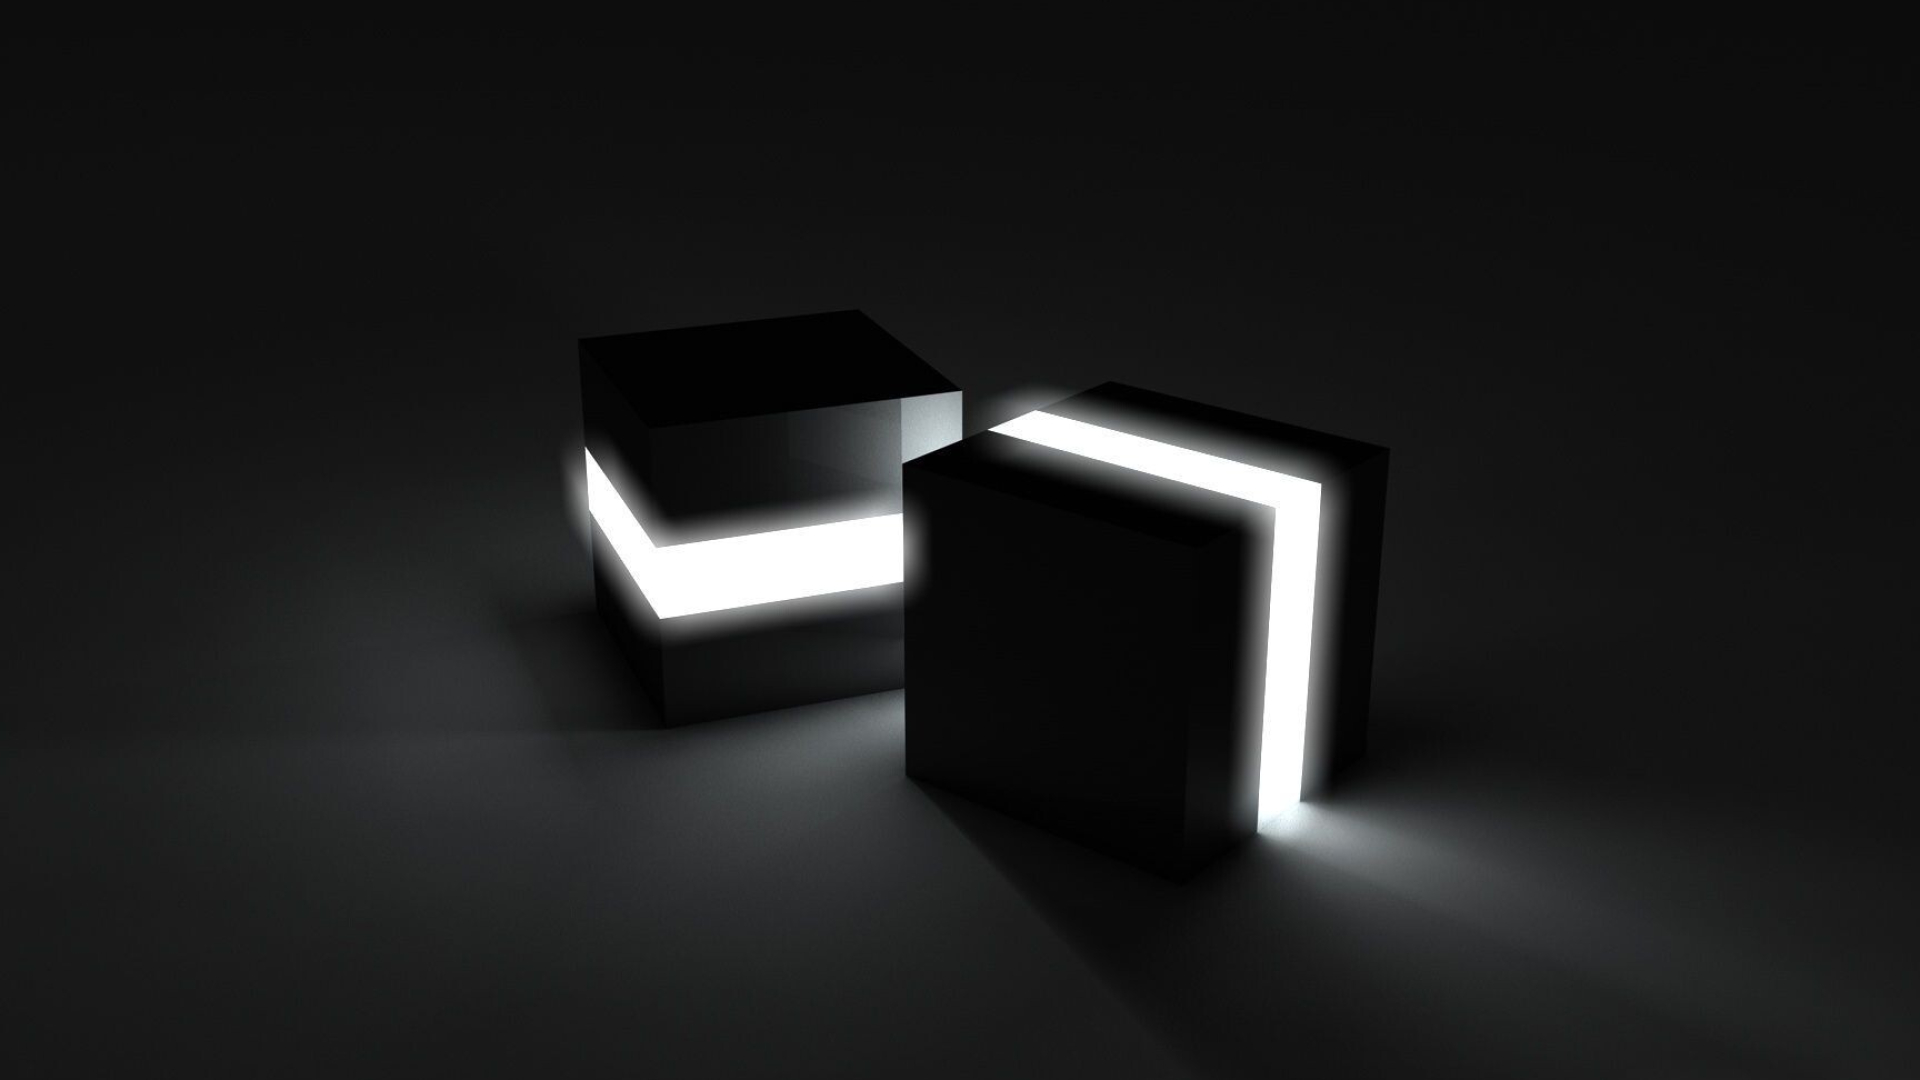 Glow in the Dark: Glowing stripes, Monochrome, Minimalistic, Monochromatic cubes. 1920x1080 Full HD Background.